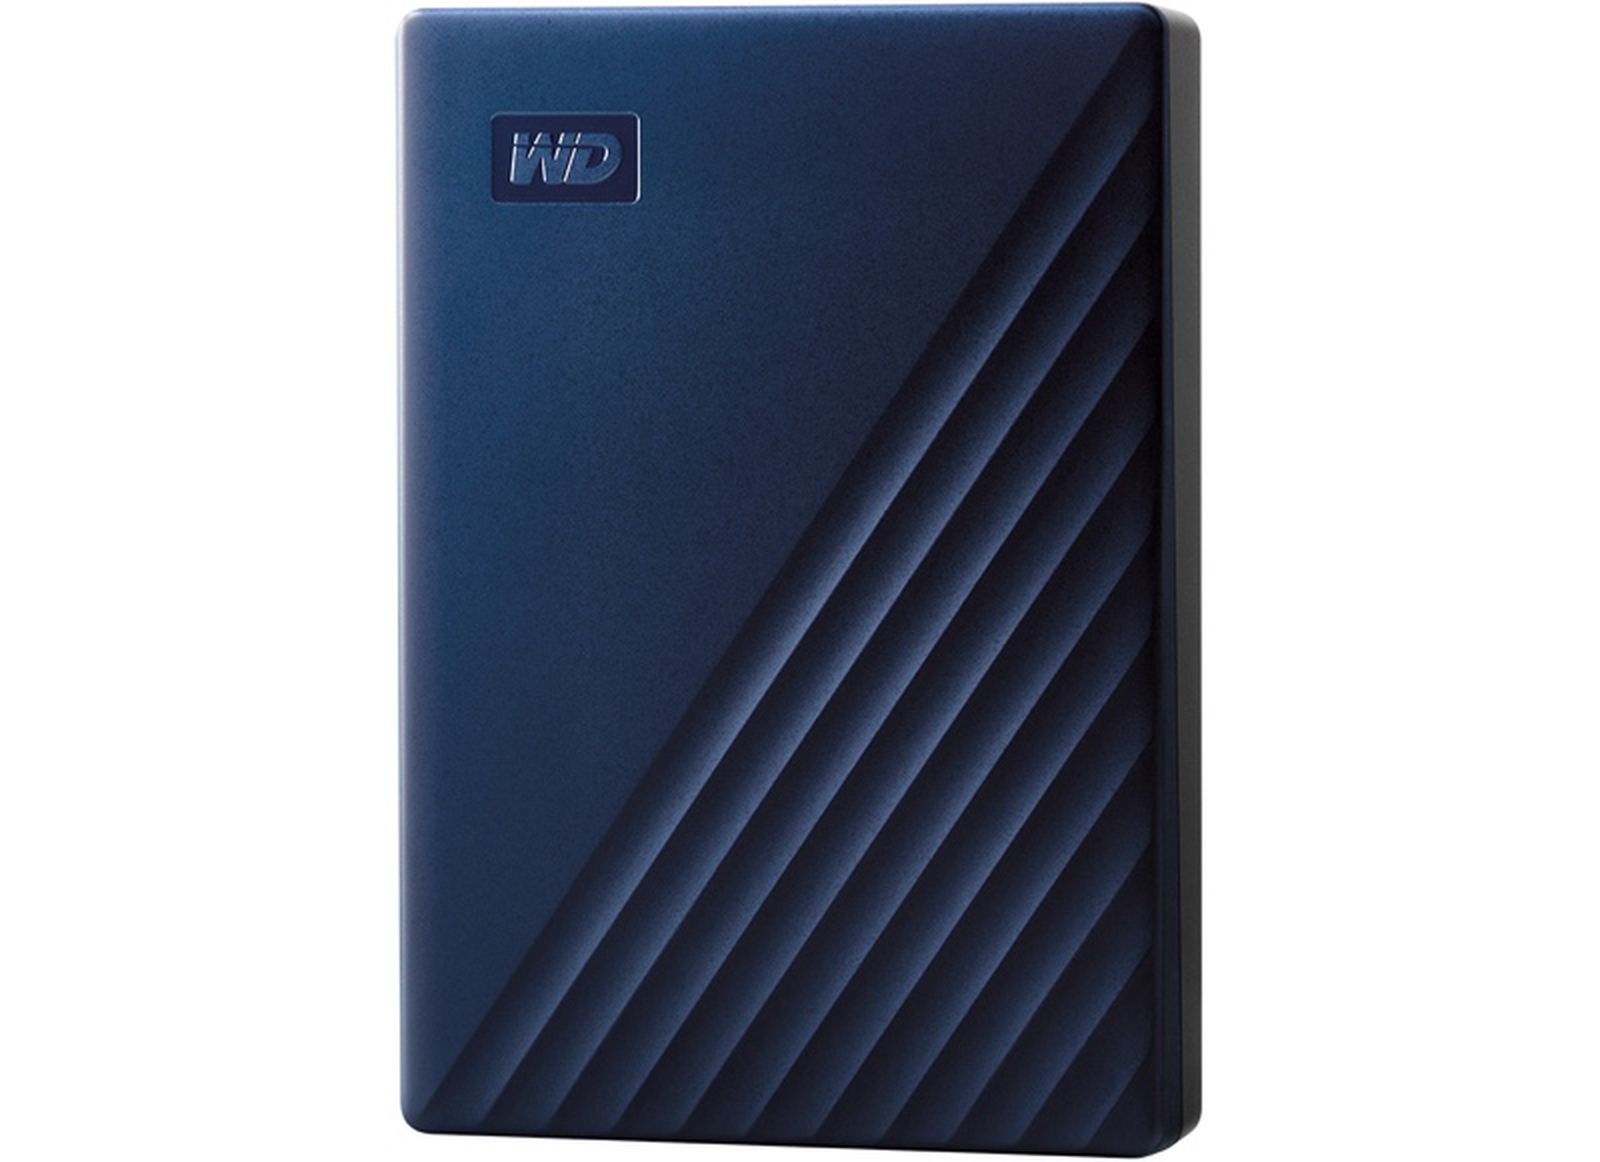 wd 1tb my passport external hard drive case